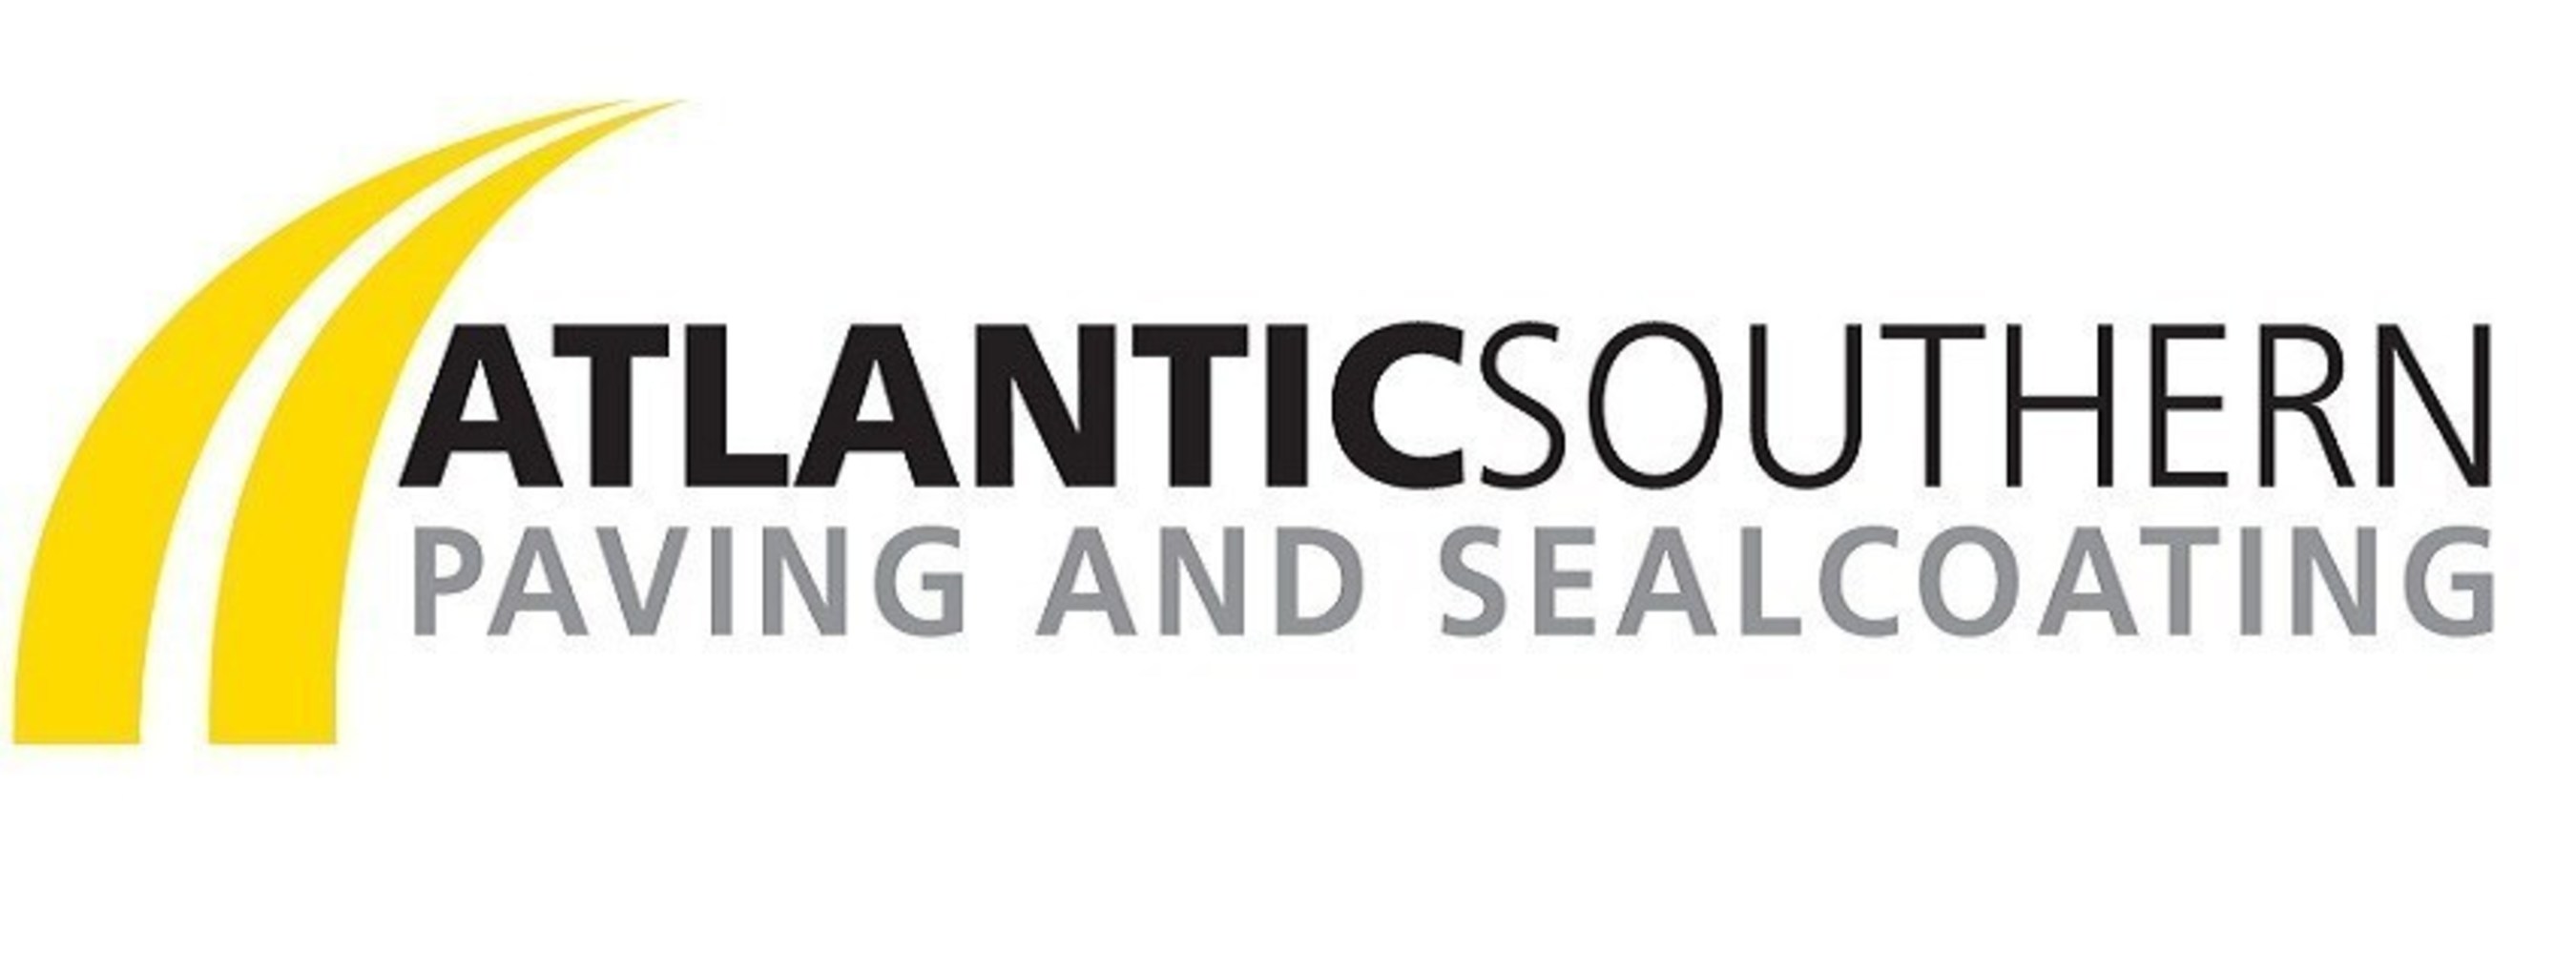 Atlantic Southern Paving and Sealcoating logo